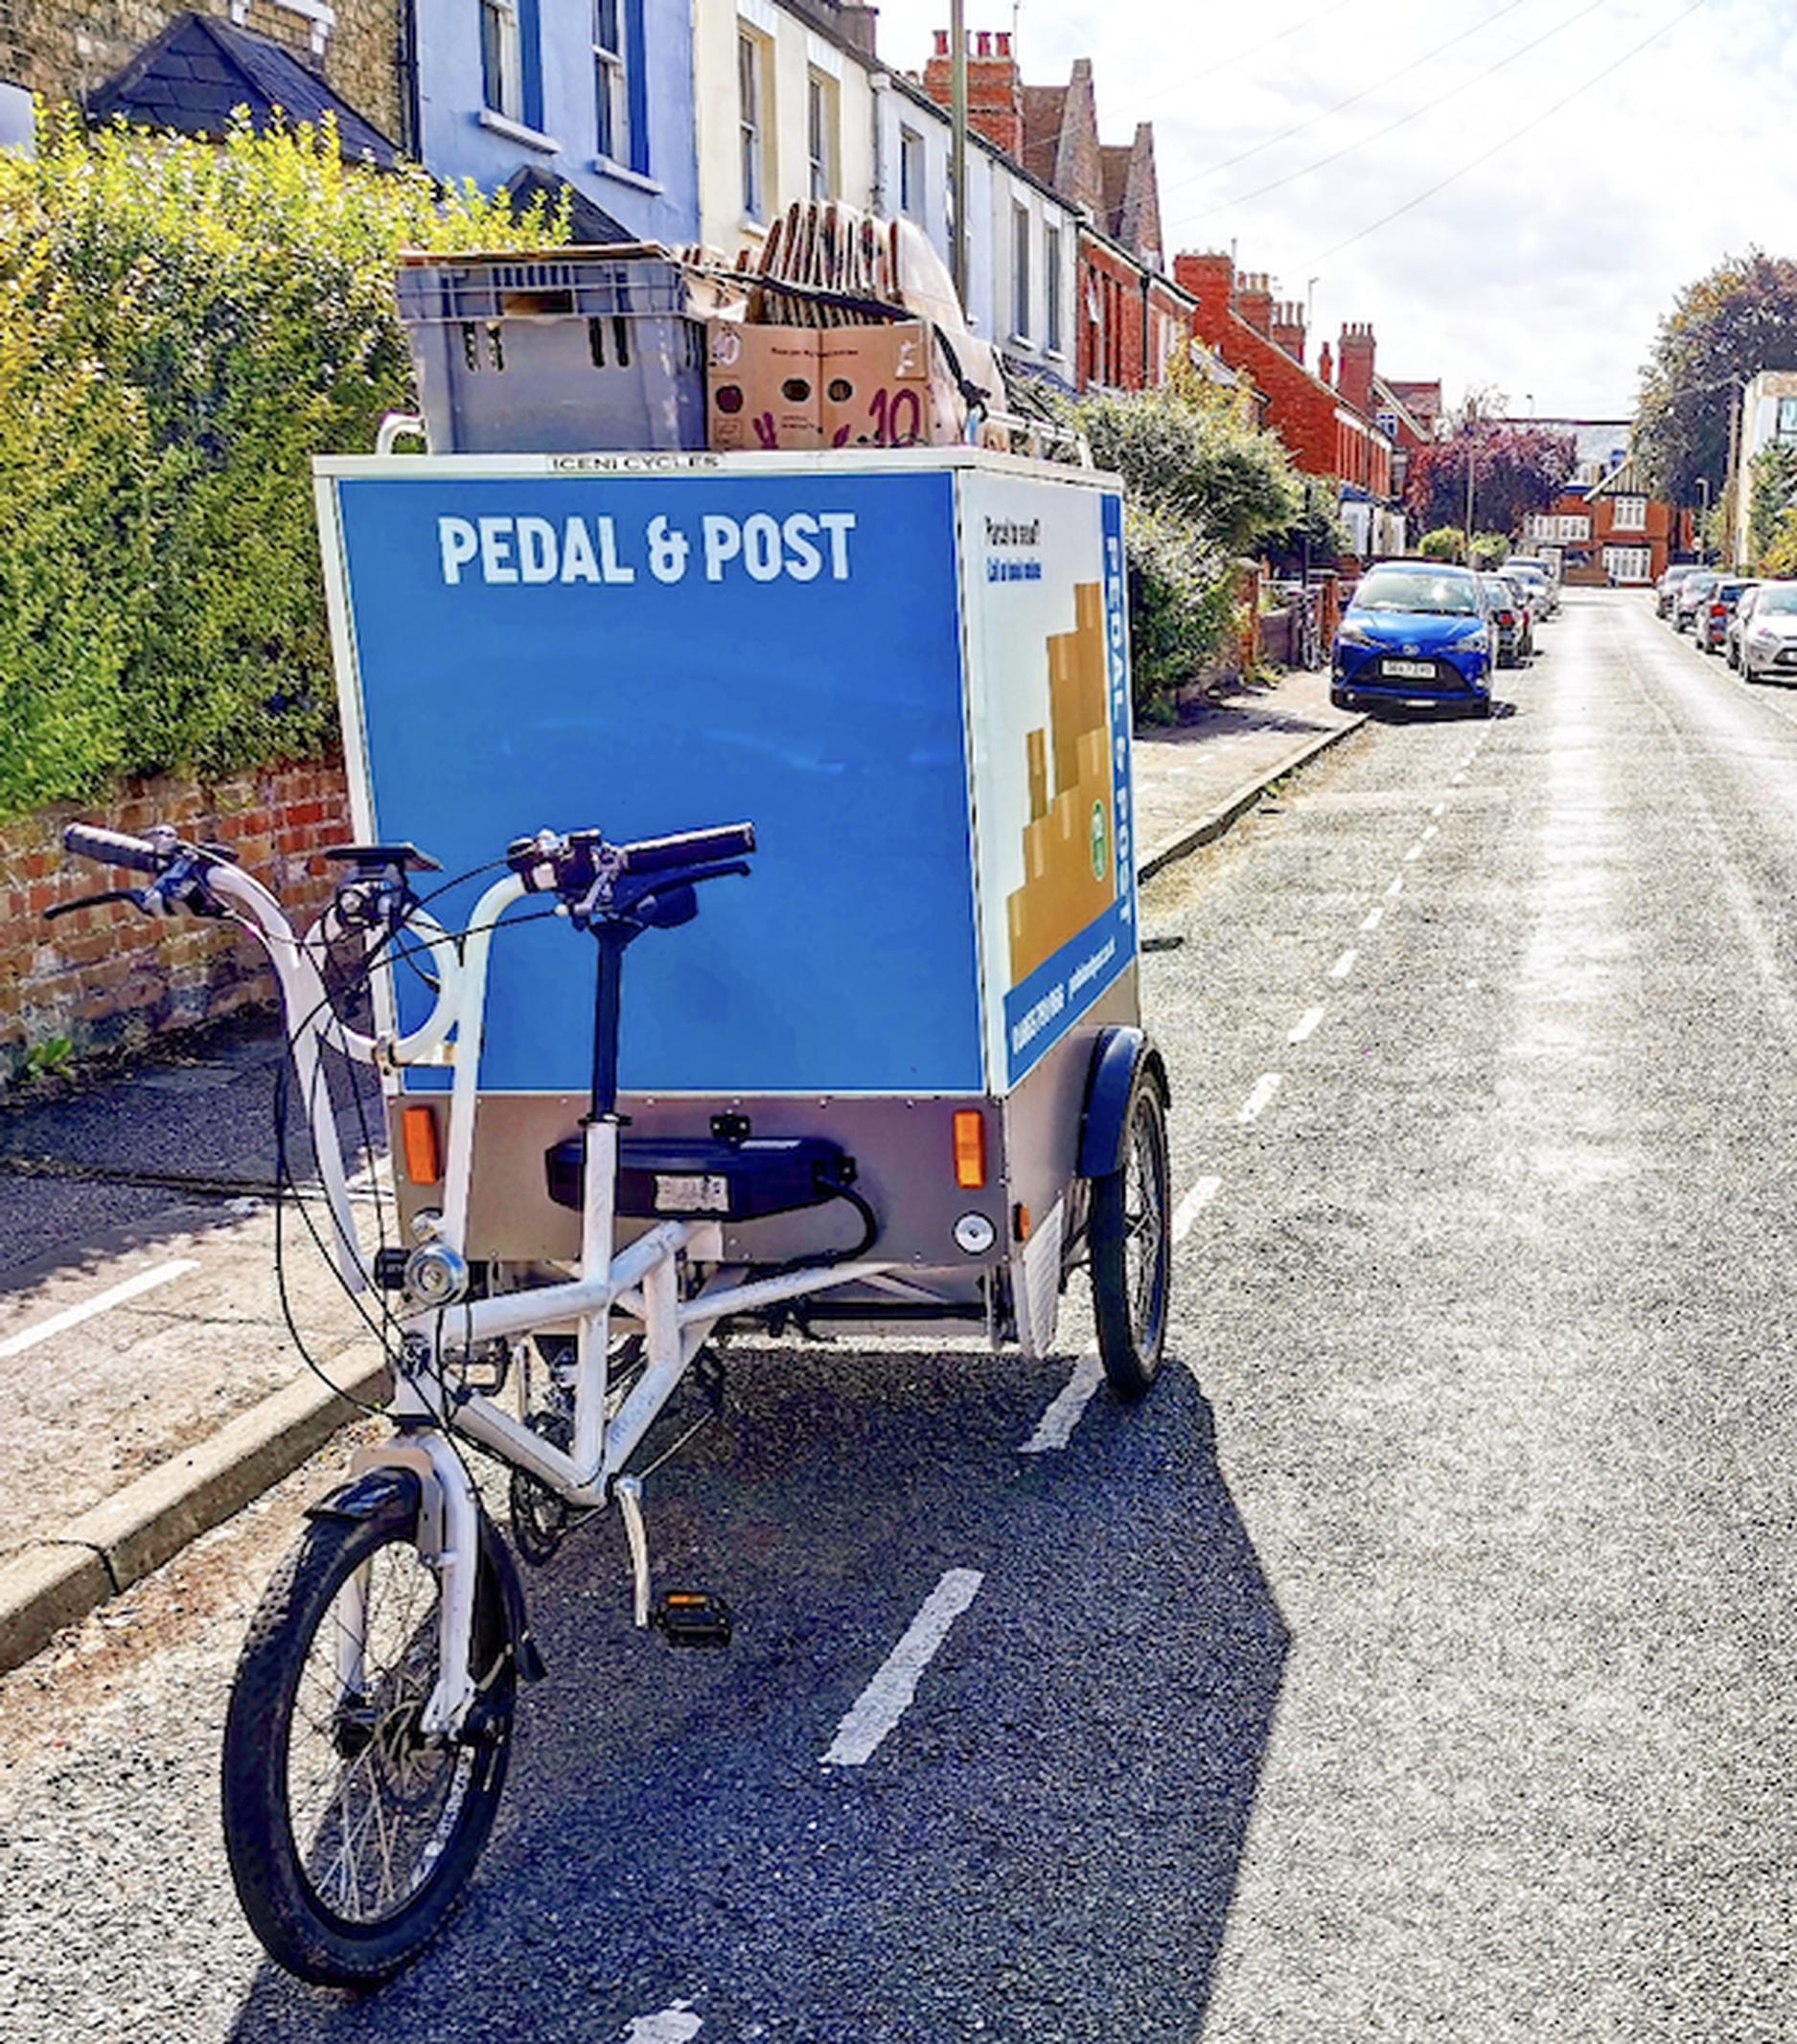 A Pedal & Post e-cargo bike